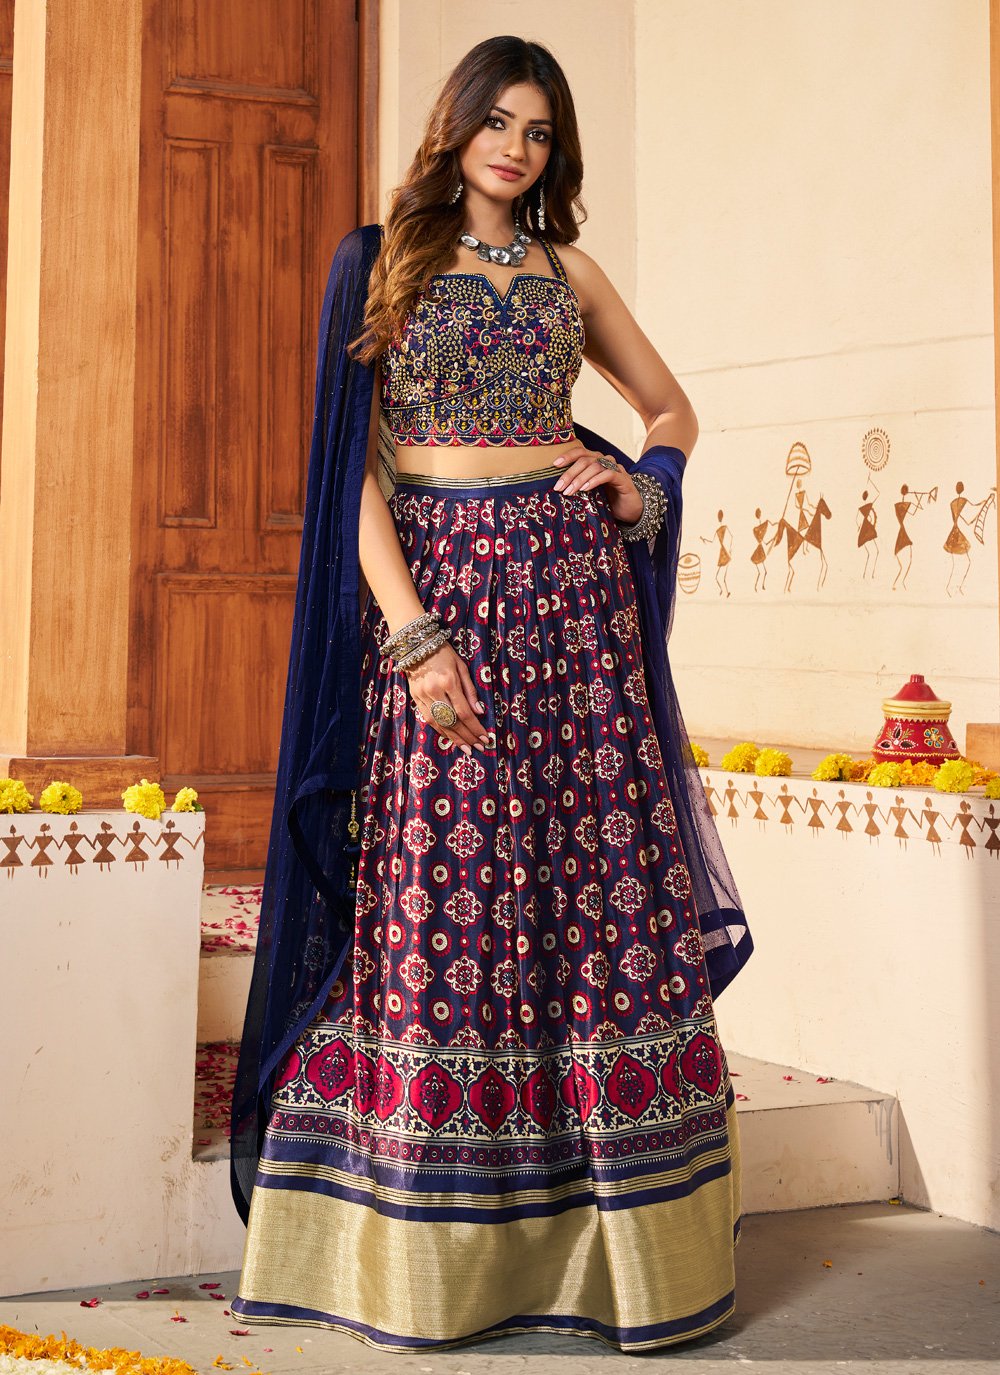 Buy Bollywood Model Rani Pink silk wedding lehenga choli in UK, USA and  Canada